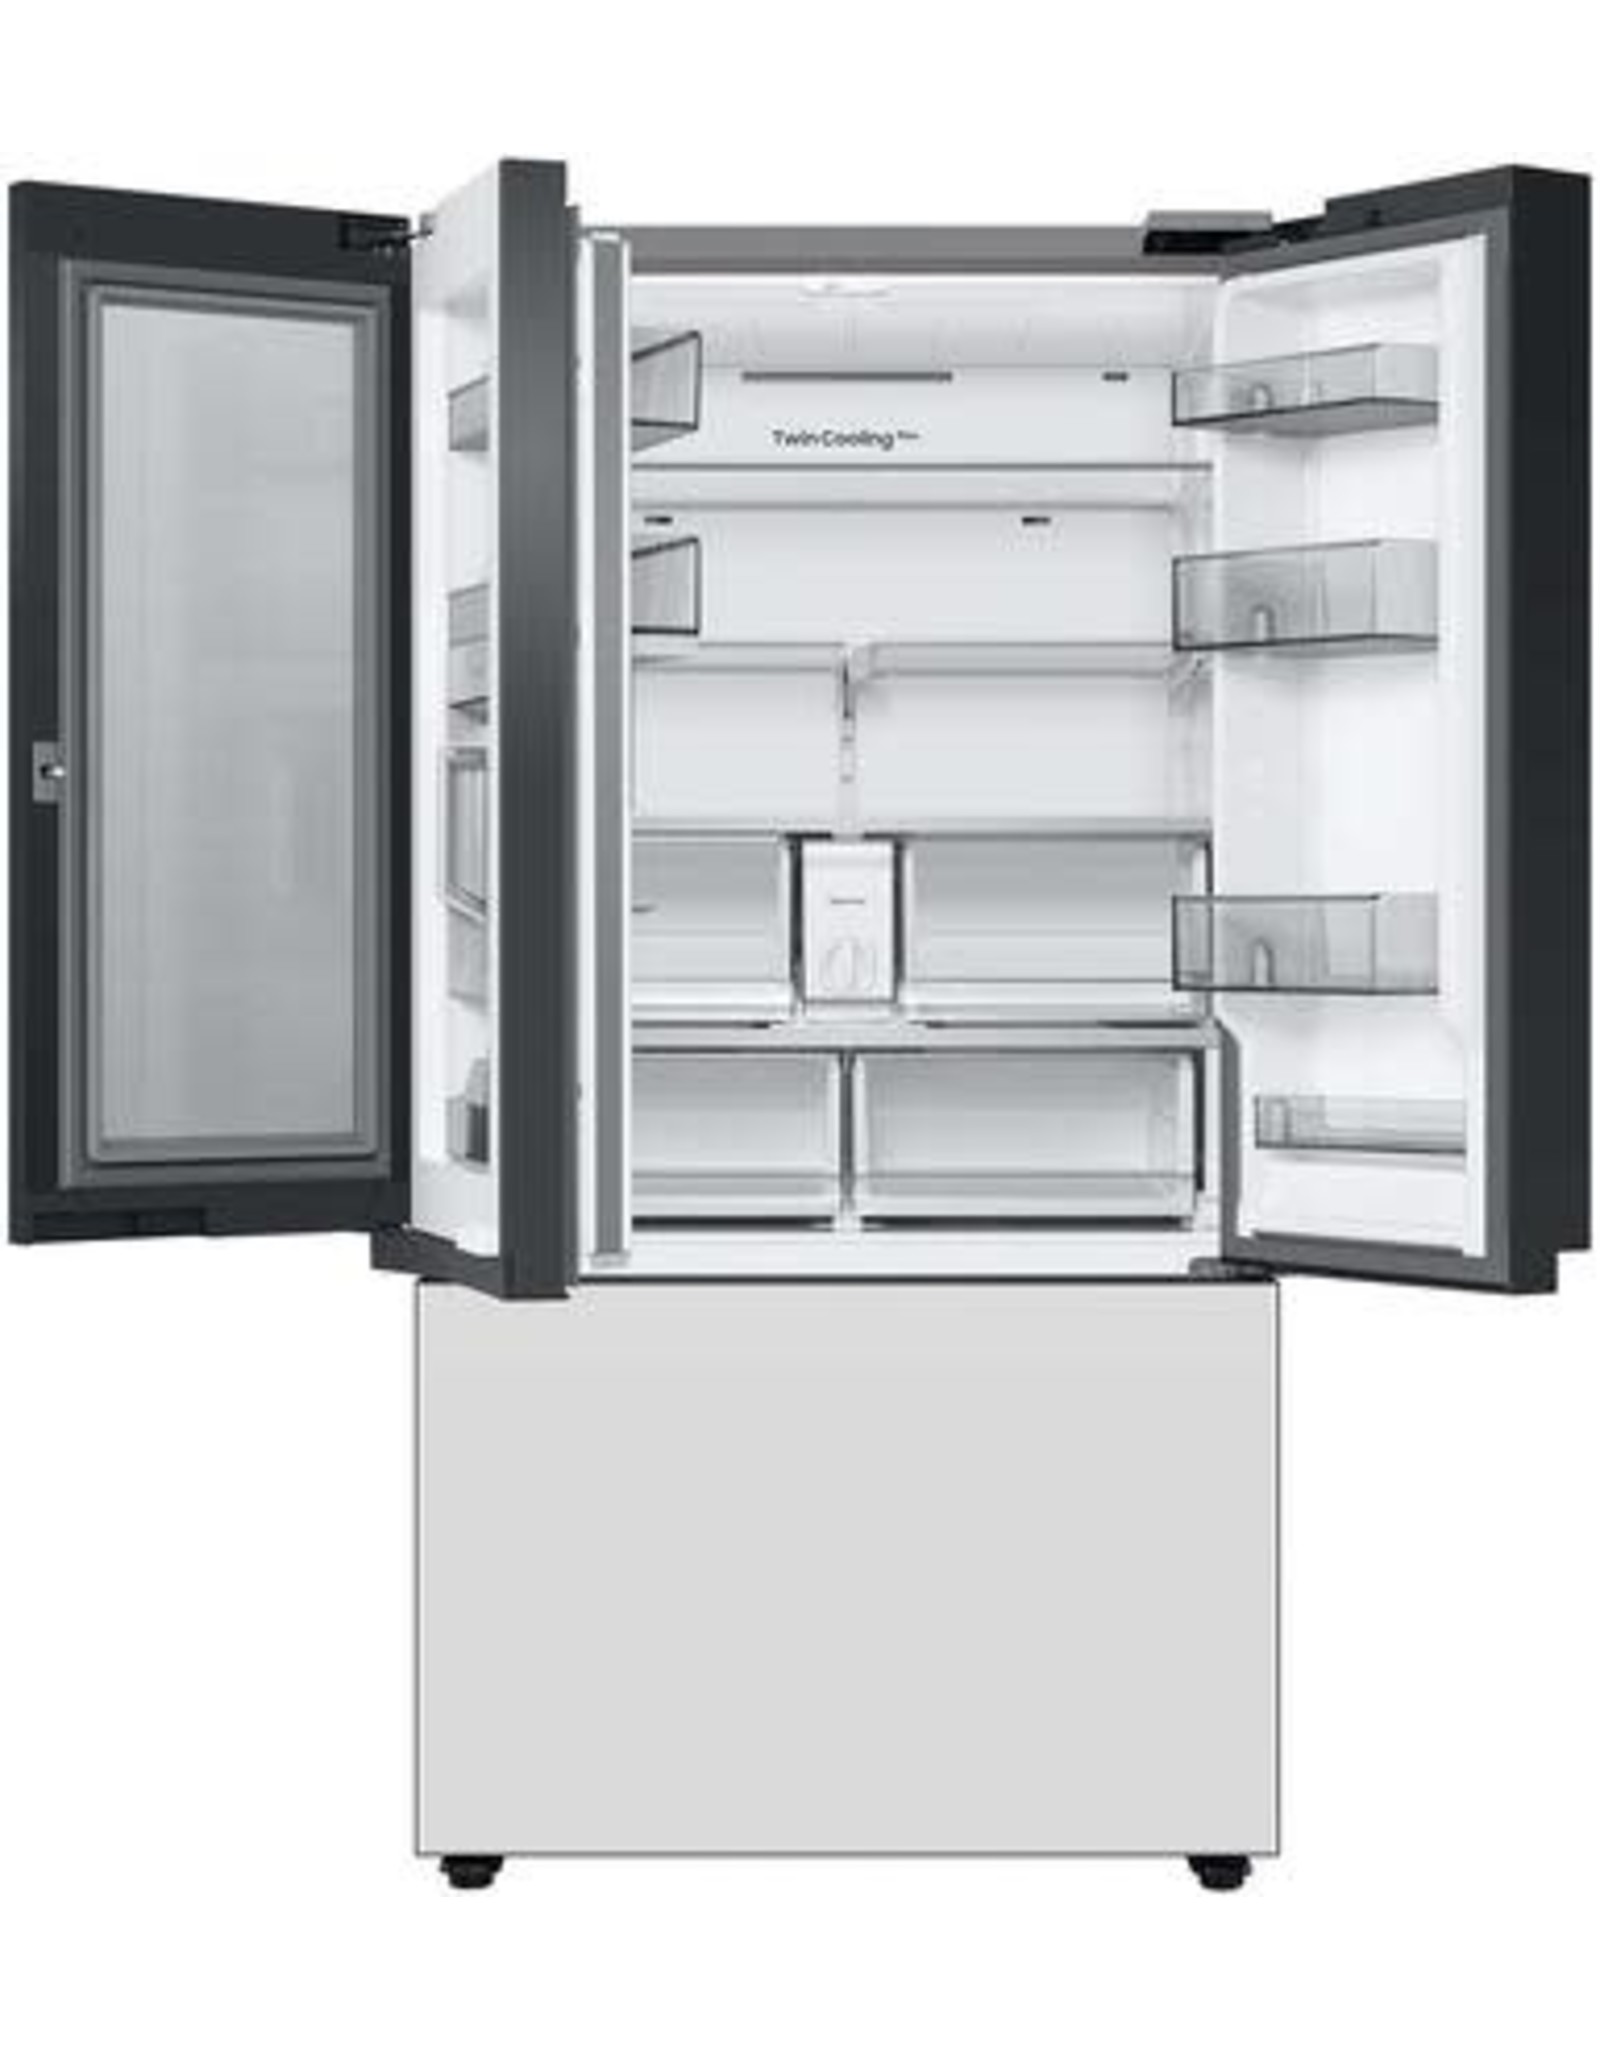 SAMSUNG Bespoke 30 cu. ft. 3-Door French Door Smart Refrigerator with Beverage Center in White Glass, Standard Depth